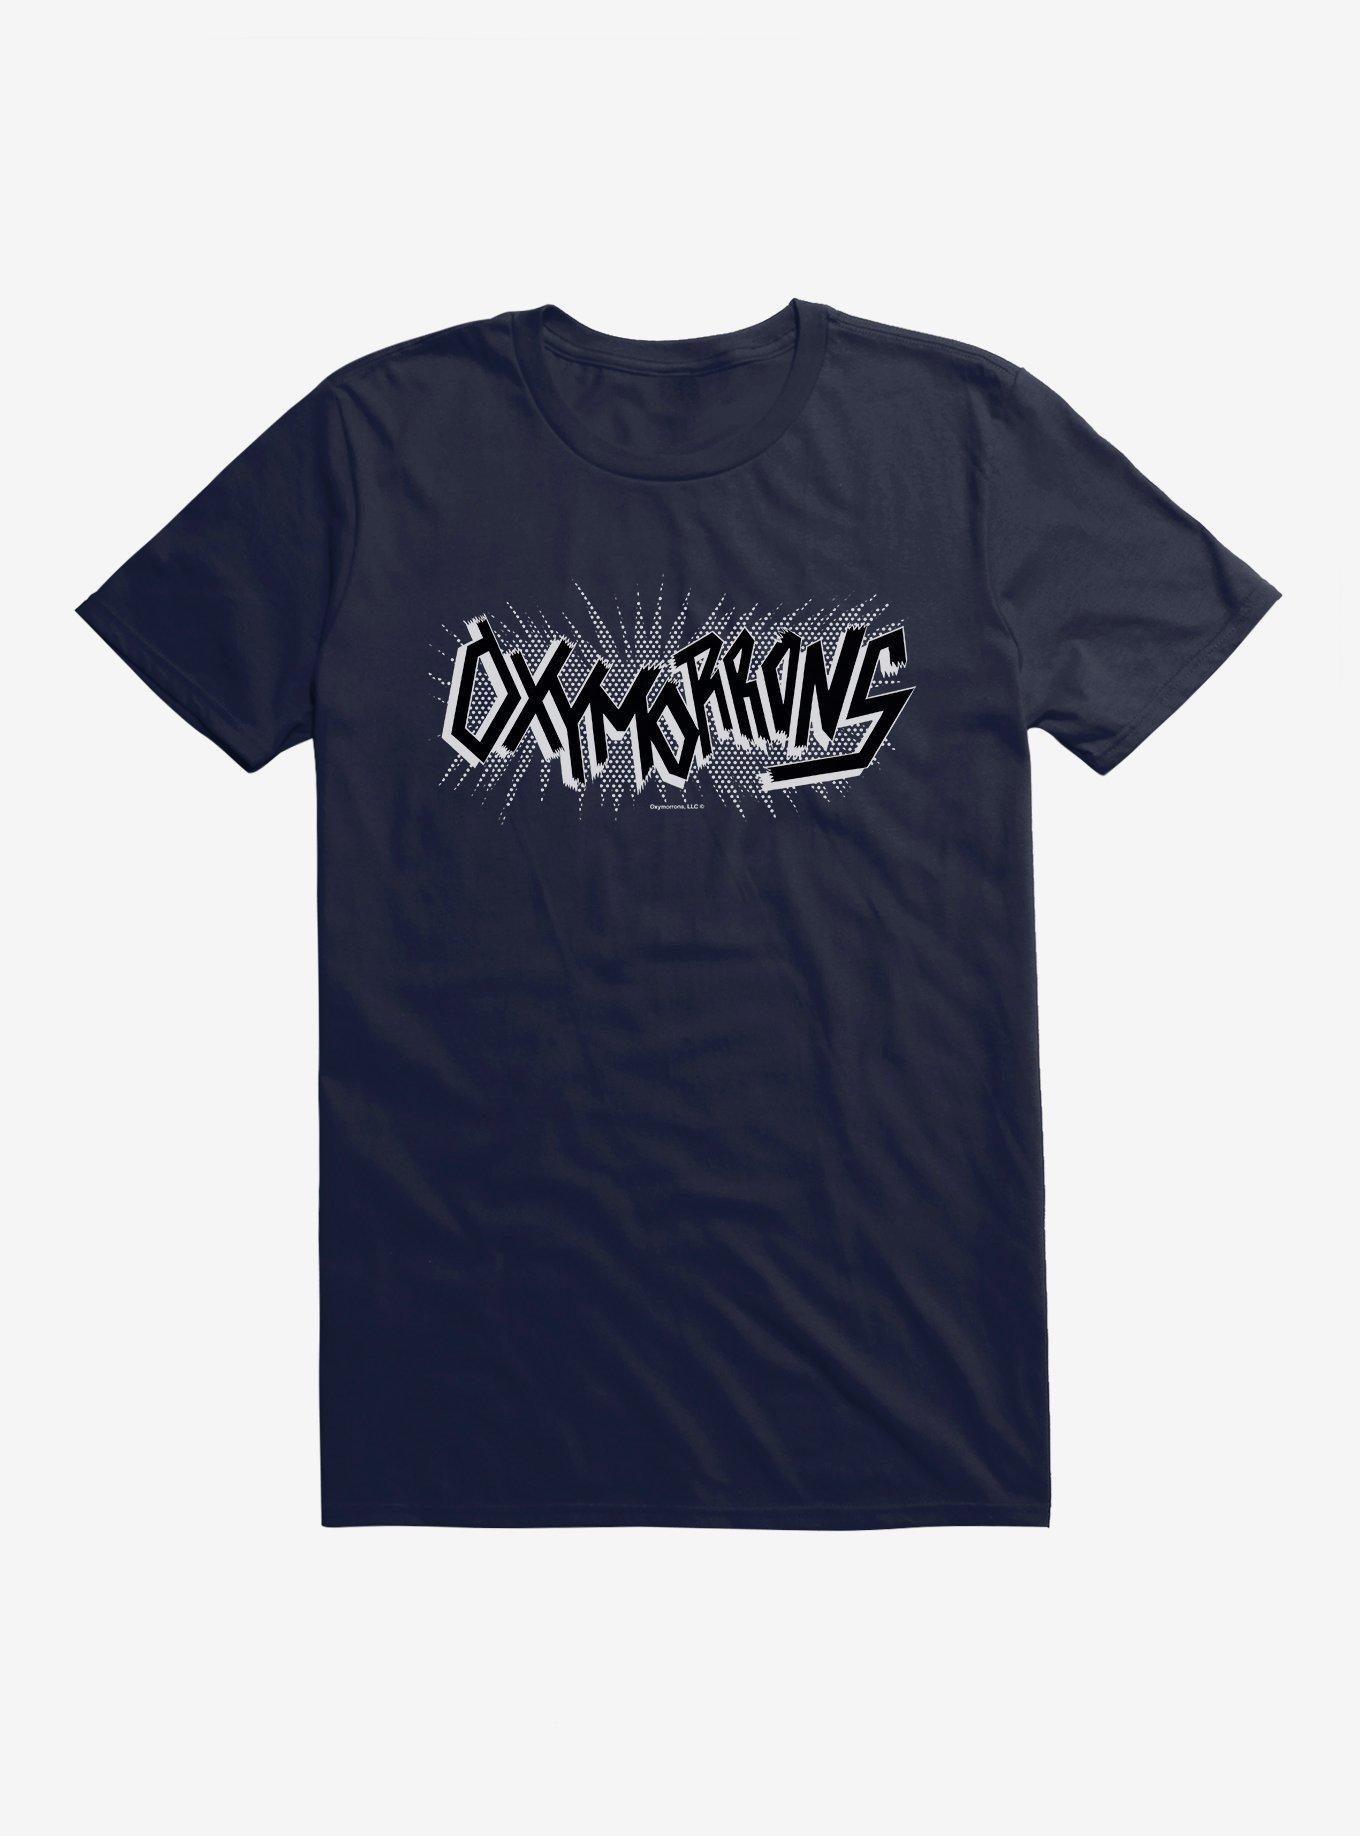 Oxymorrons Logo T-Shirt | Hot Topic